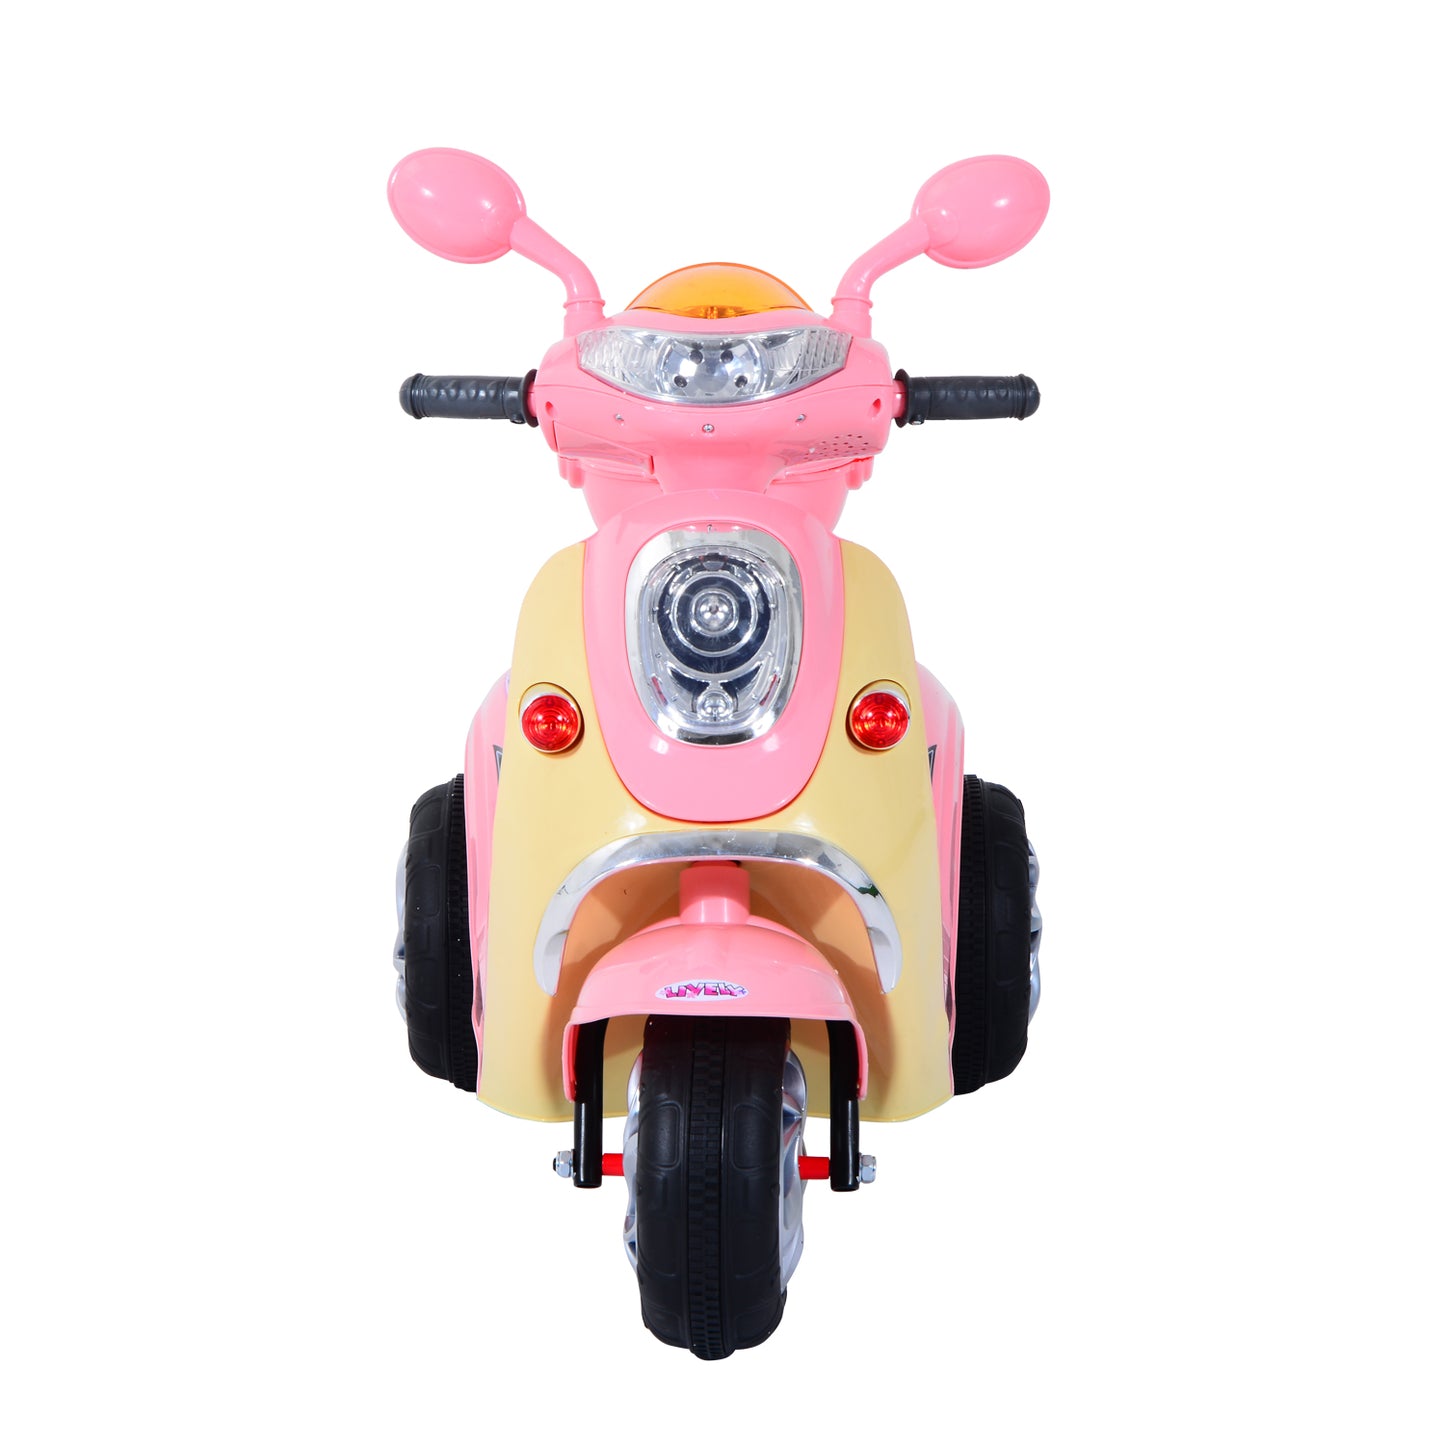 HOMCOM Plastic Music Playing Electric Ride-On Motorbike w/ Lights Pink